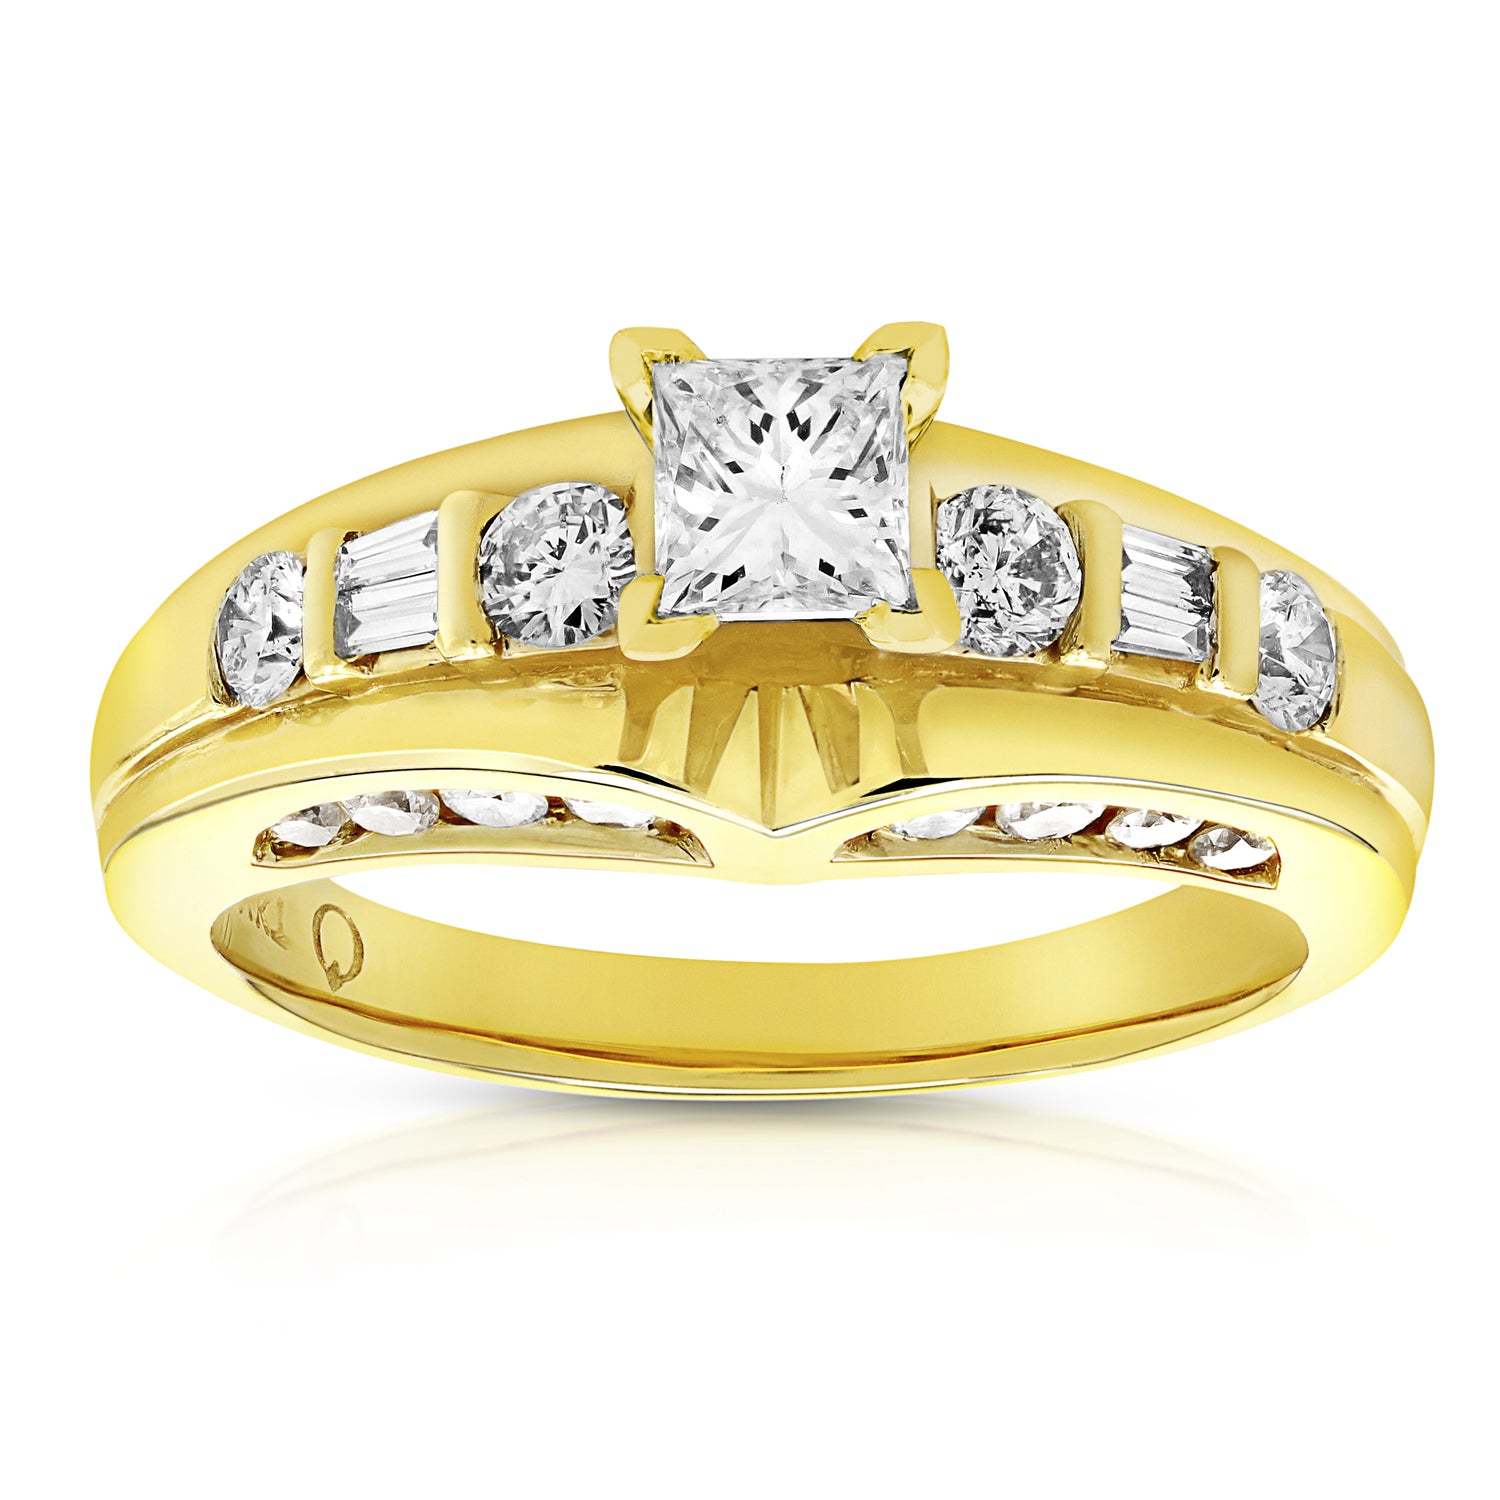 1 cttw Diamond Engagement Ring 14K Yellow Gold Princess Cut Bridal Size 7